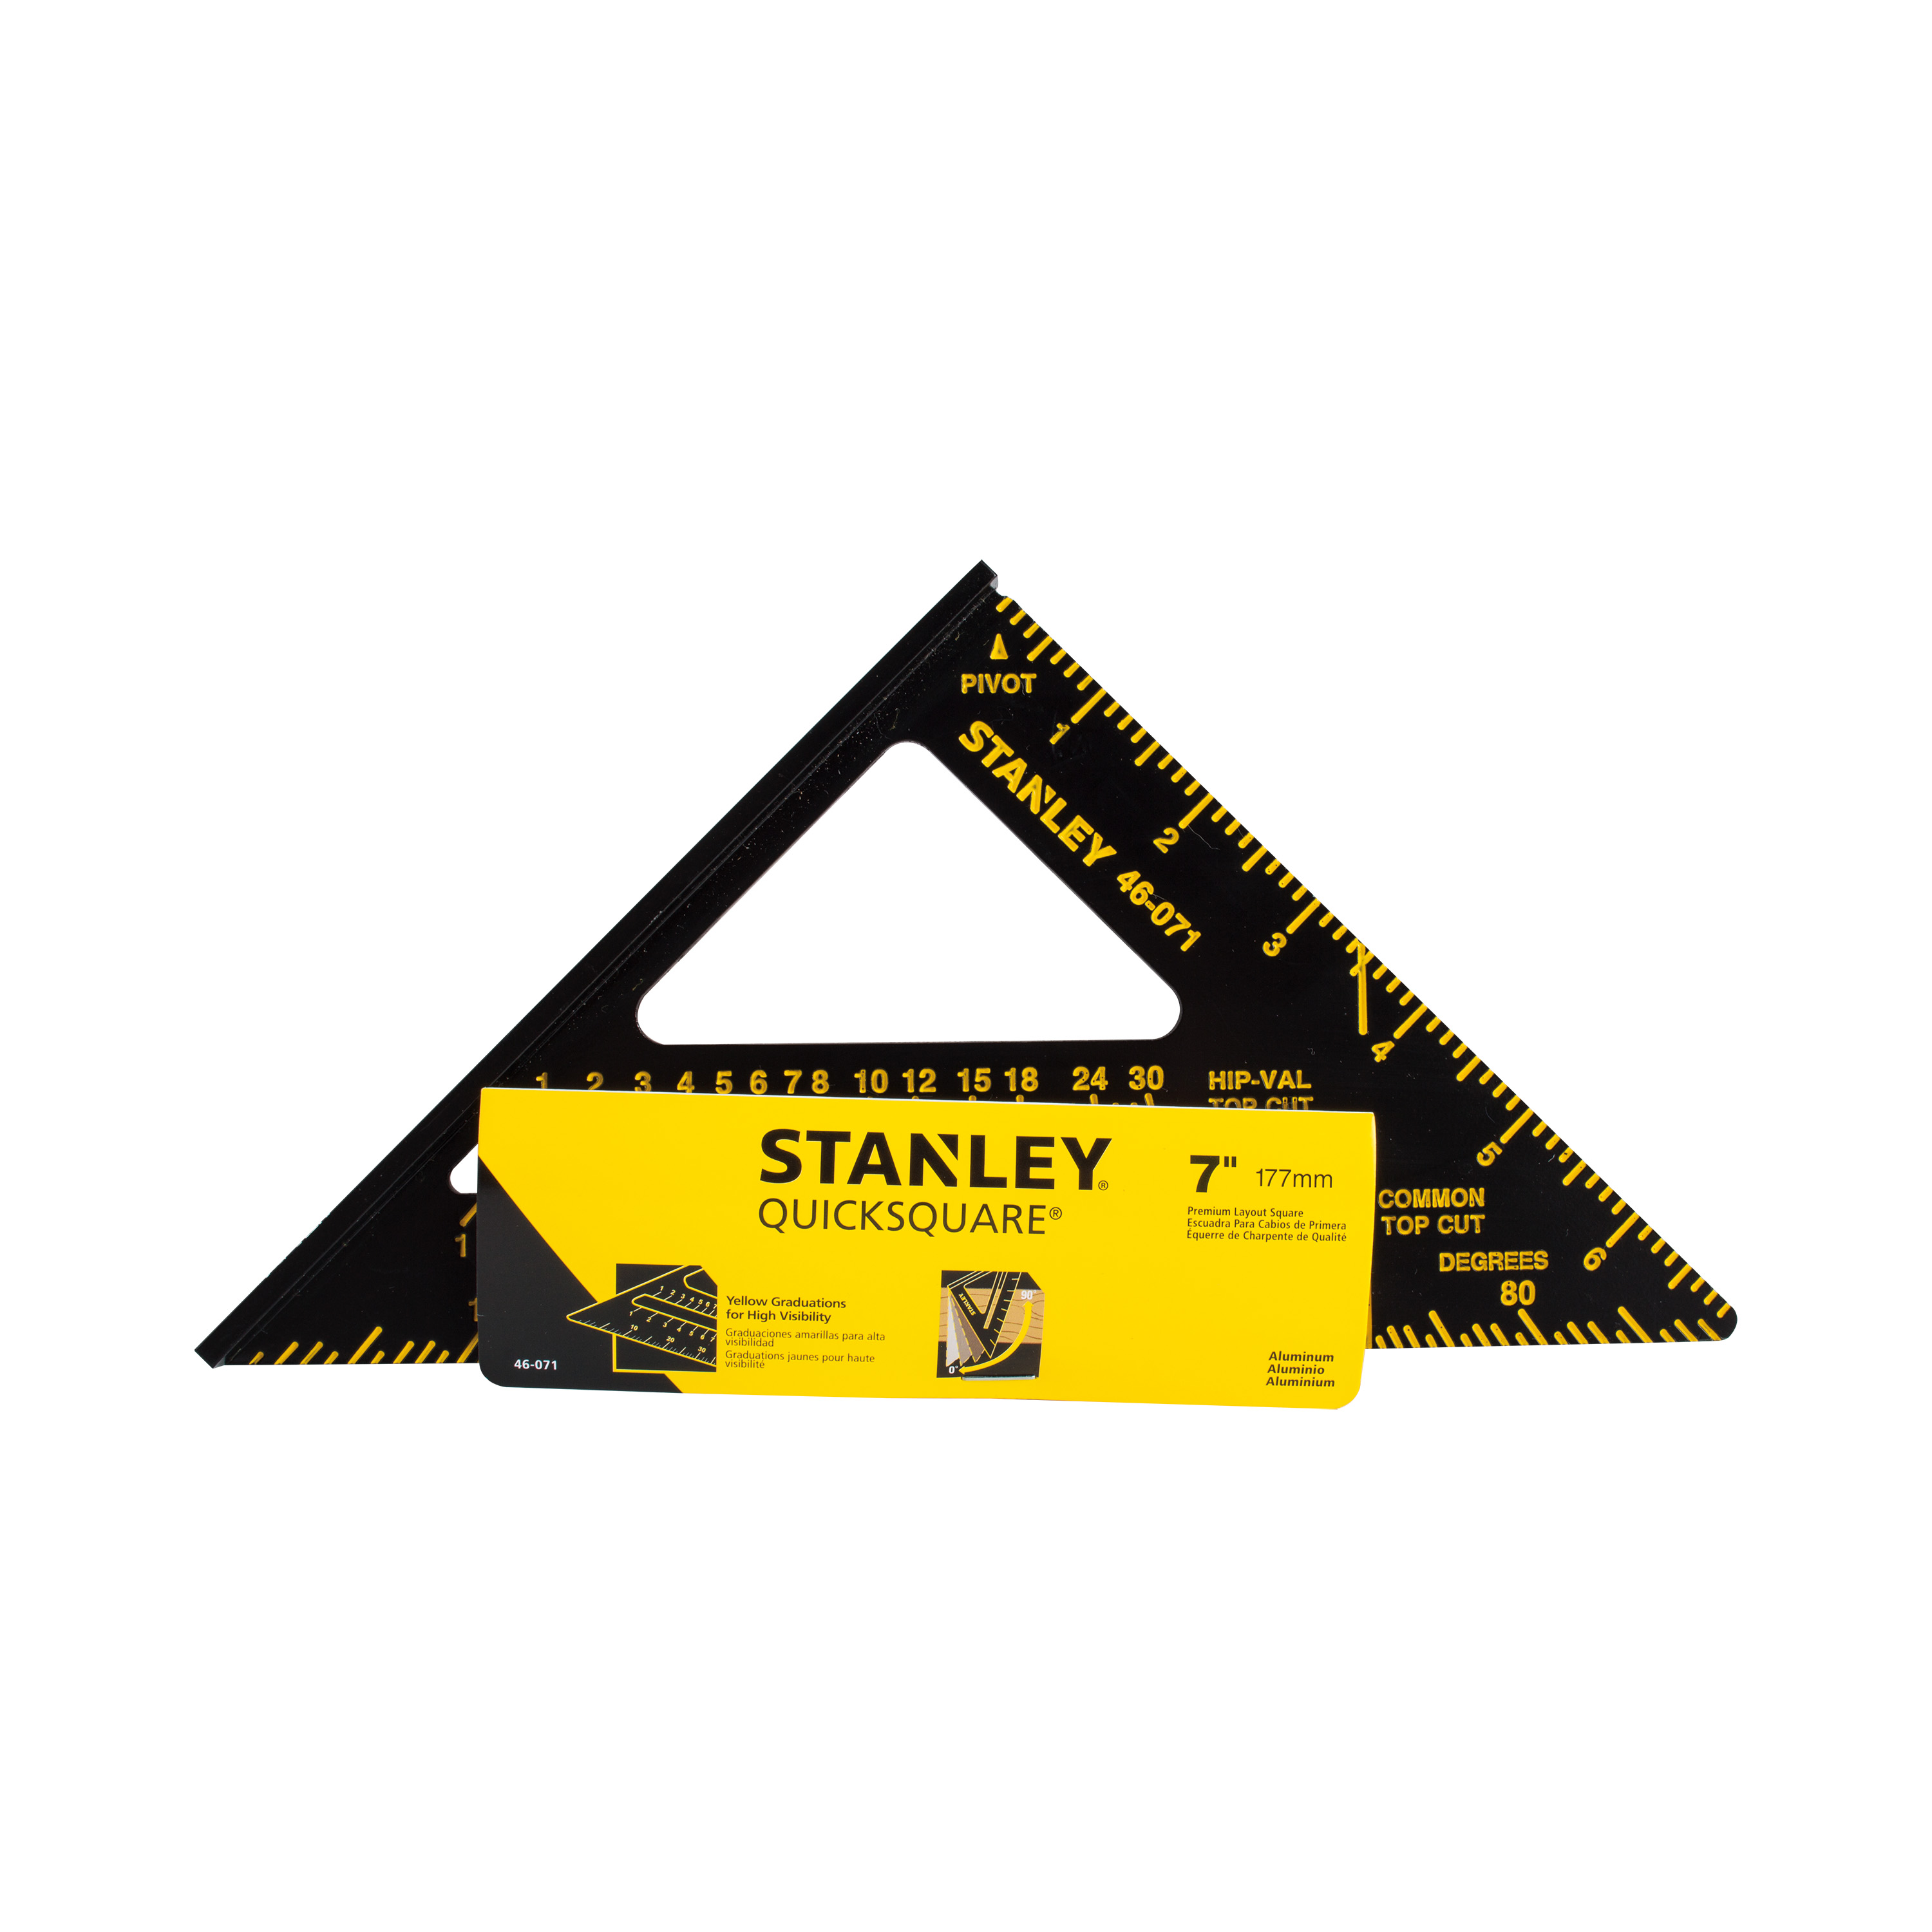 STANLEY® 46-071 Premium Quick Square Layout Tool, 7" - image 1 of 5